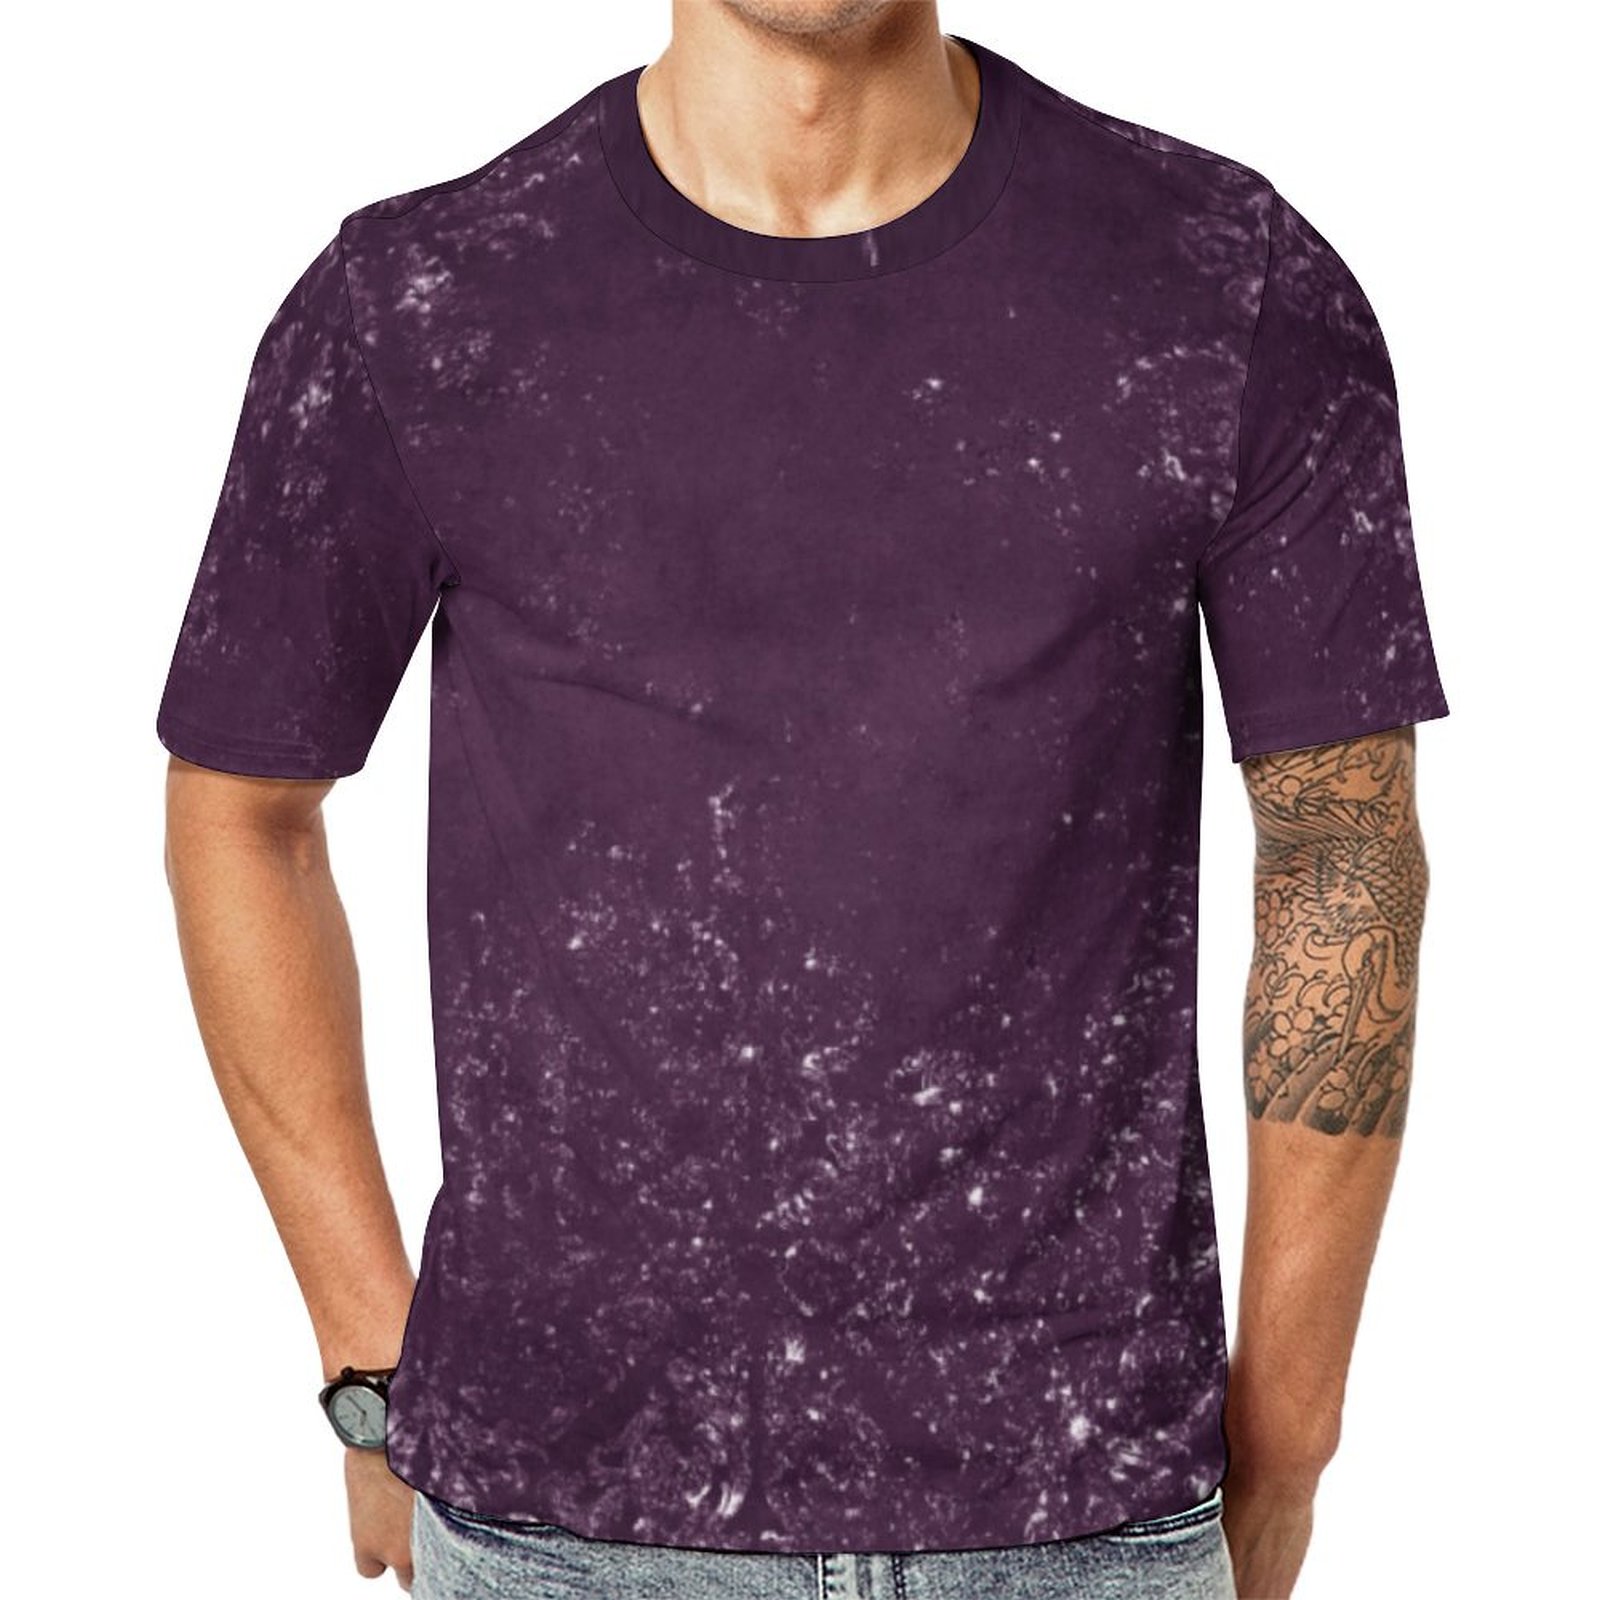 Glimmery Eggplant Damask Rich Plum Purple Grunge Short Sleeve Print Unisex Tshirt Summer Casual Tees for Men and Women Coolcoshirts